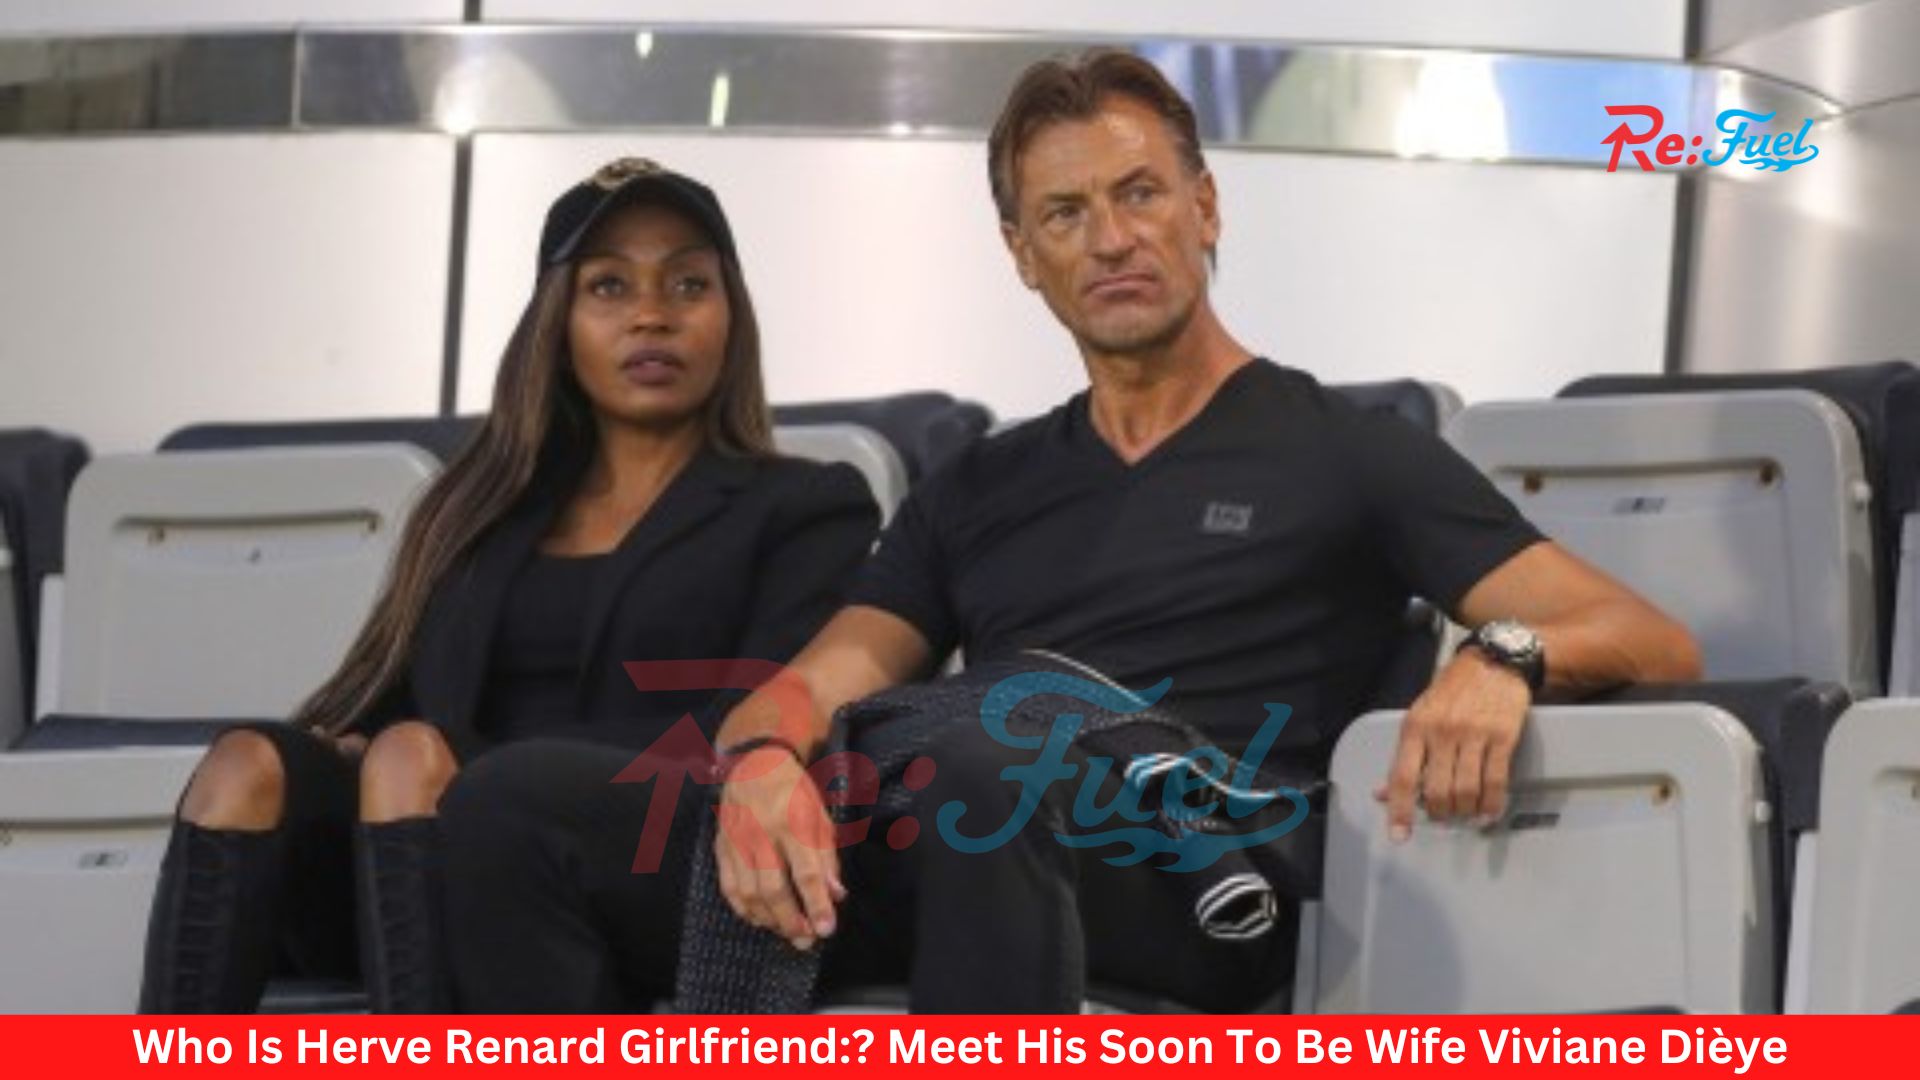 Who Is Herve Renard Girlfriend:? Meet His Soon To Be Wife Viviane Dièye